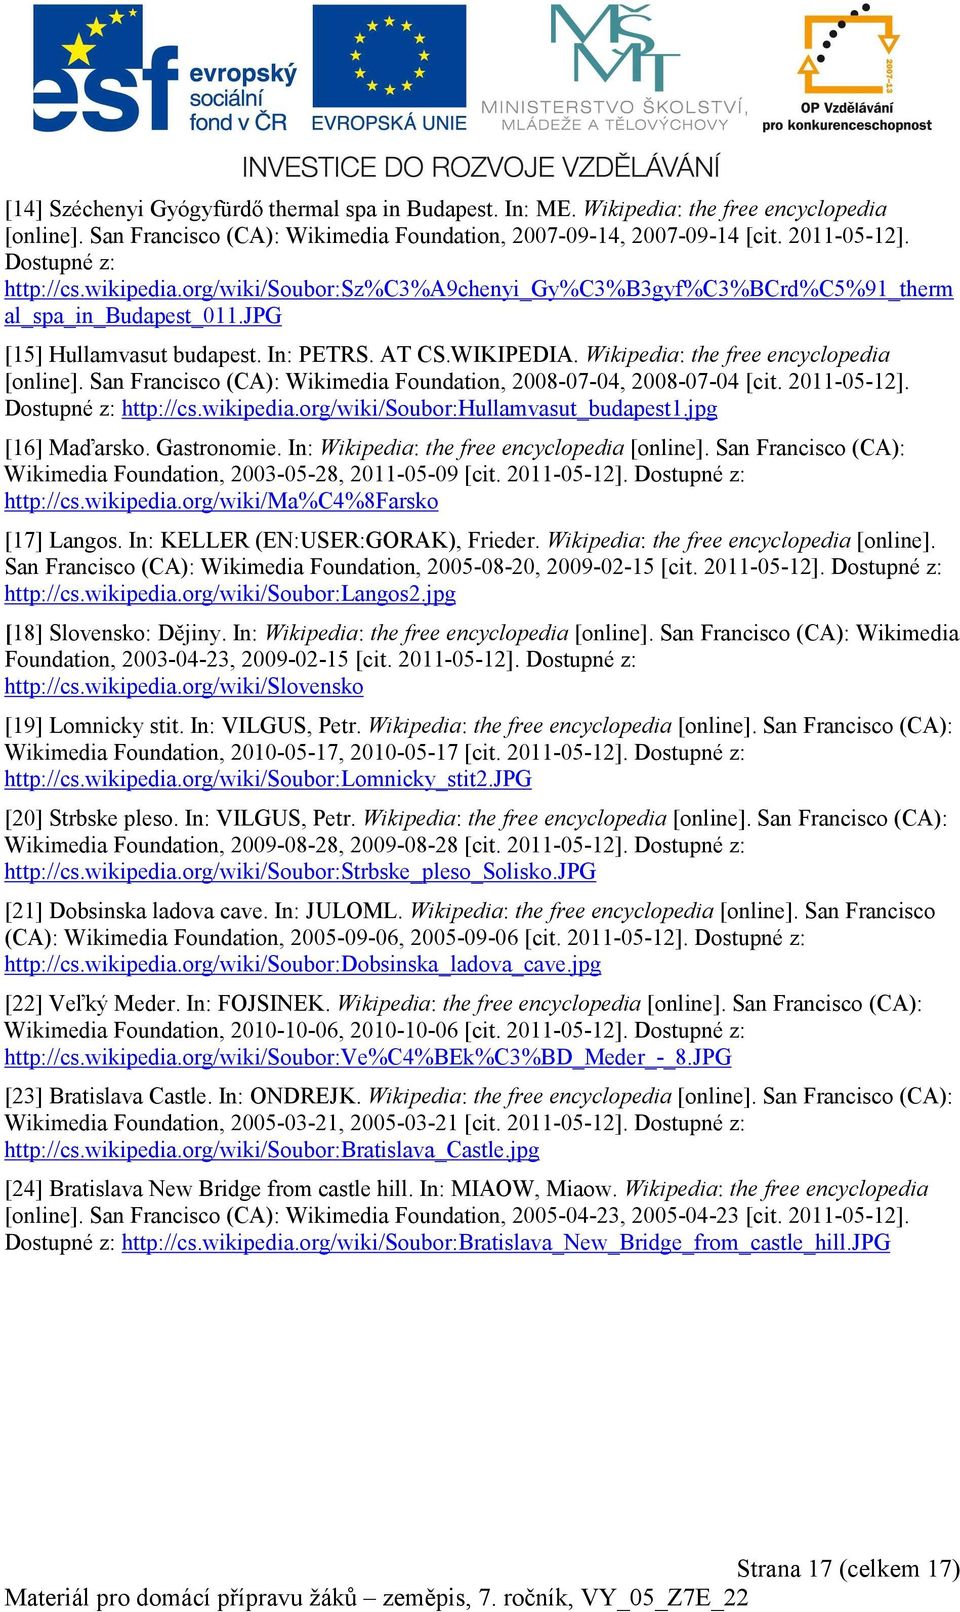 Wikipedia: the free encyclopedia [online]. San Francisco (CA): Wikimedia Foundation, 2008-07-04, 2008-07-04 [cit. 2011-05-12]. Dostupné z: http://cs.wikipedia.org/wiki/soubor:hullamvasut_budapest1.